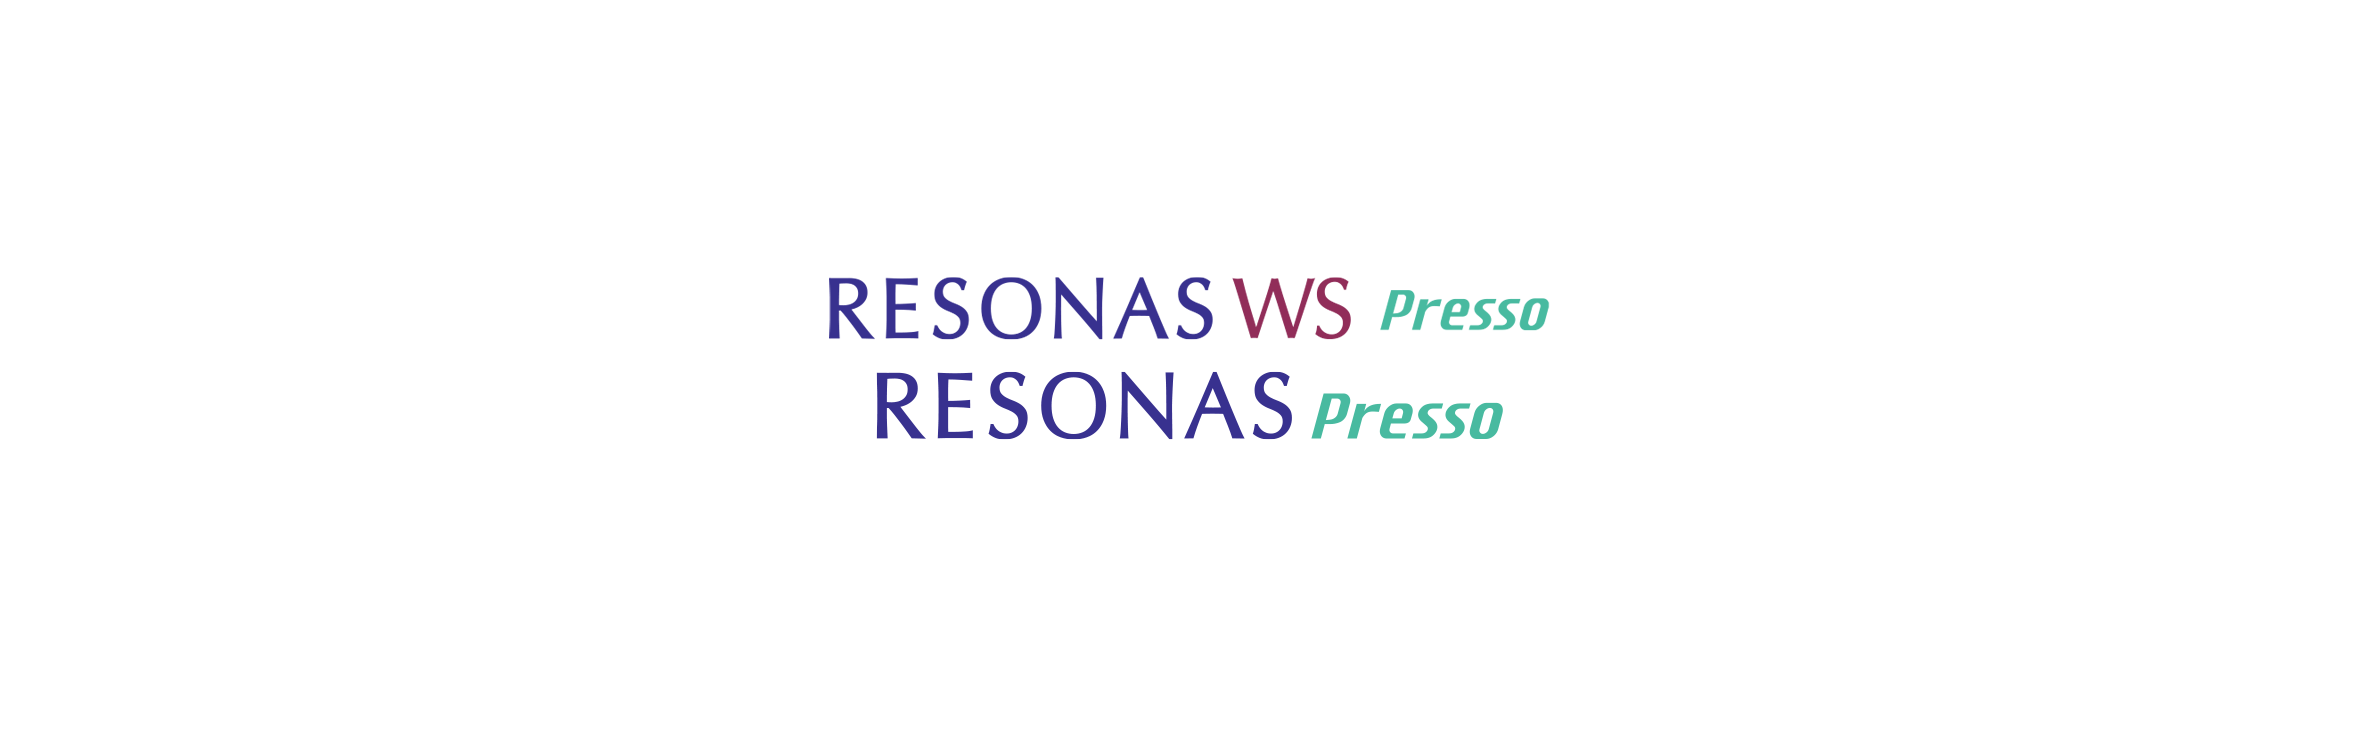 RESONAS PRESSO WS / RESONAS PRESSO